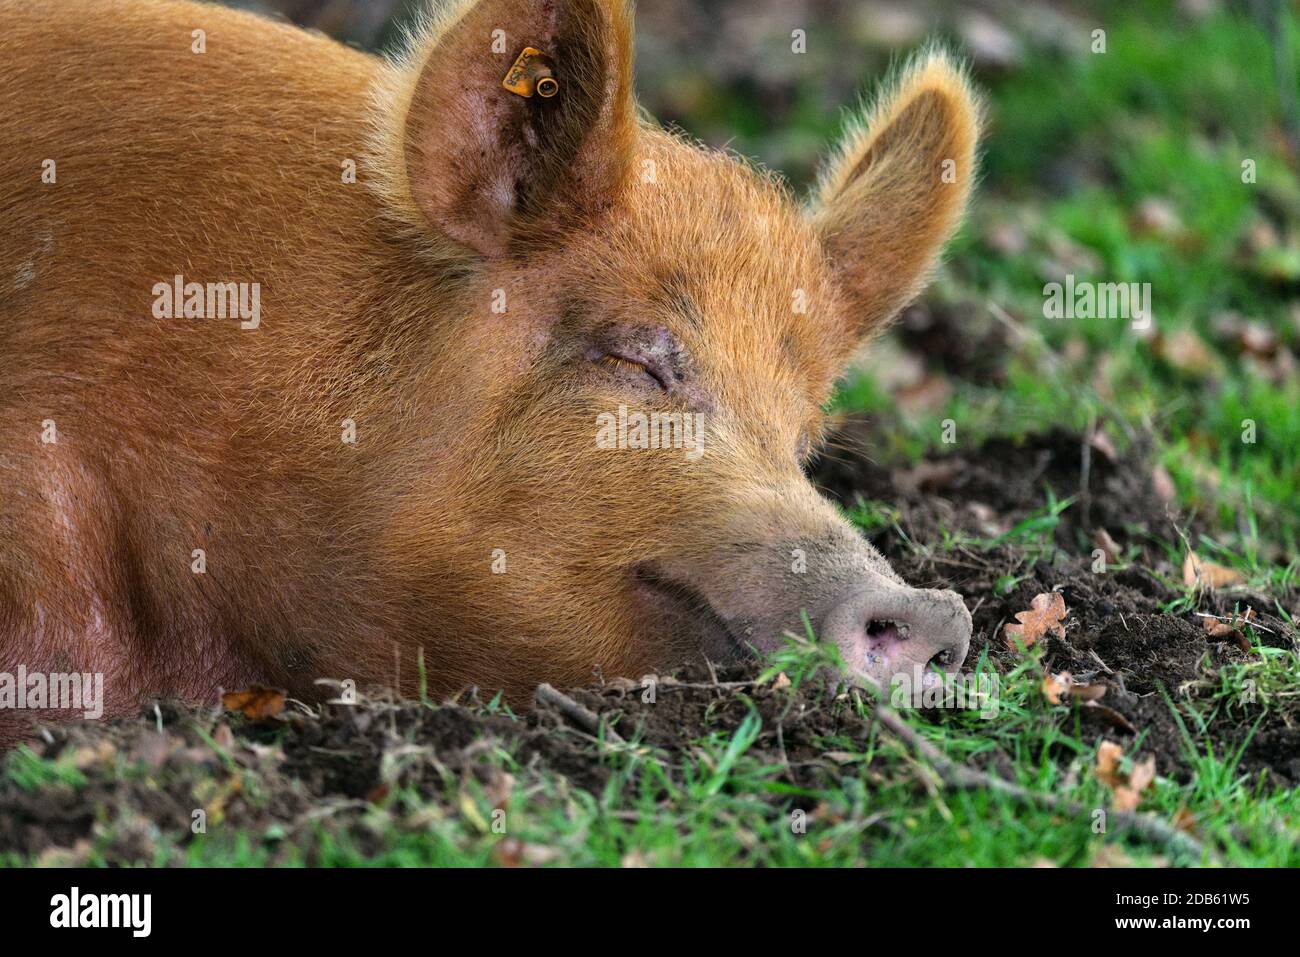 tamworth pig close up of face Stock Photo